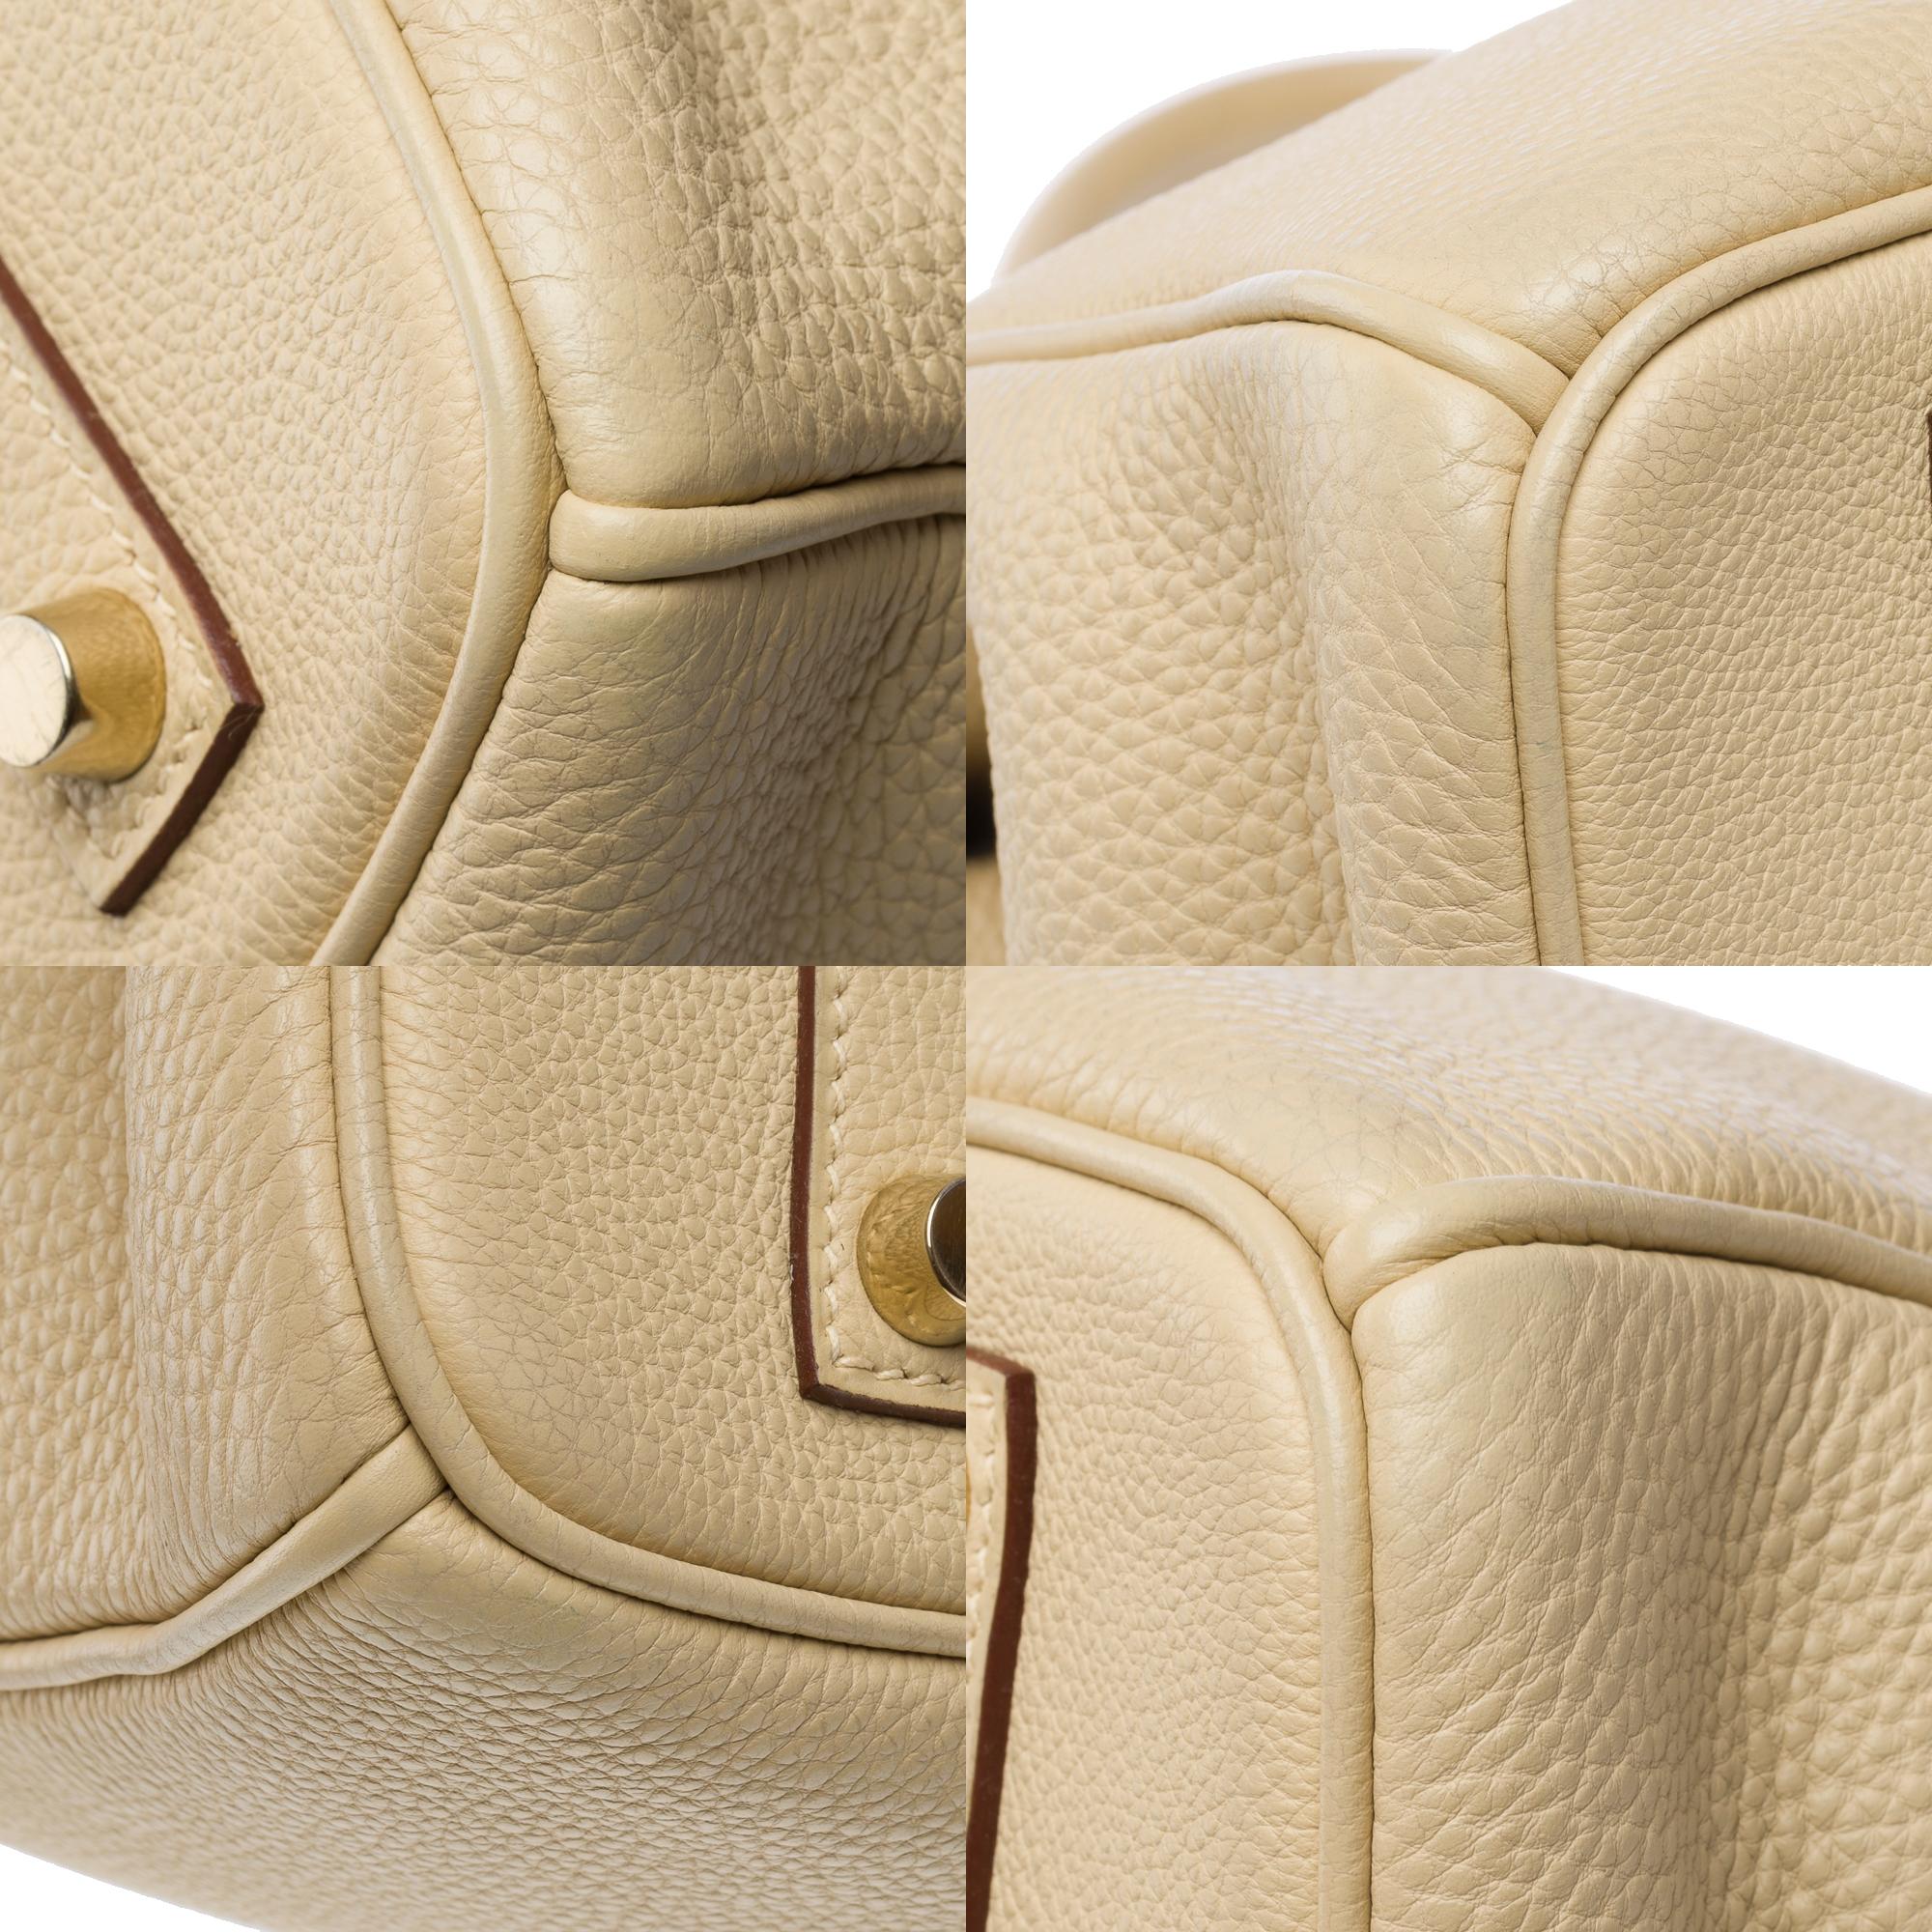 Amazing Hermès Birkin 35 handbag in Parchemin Togo leather, GHW 8